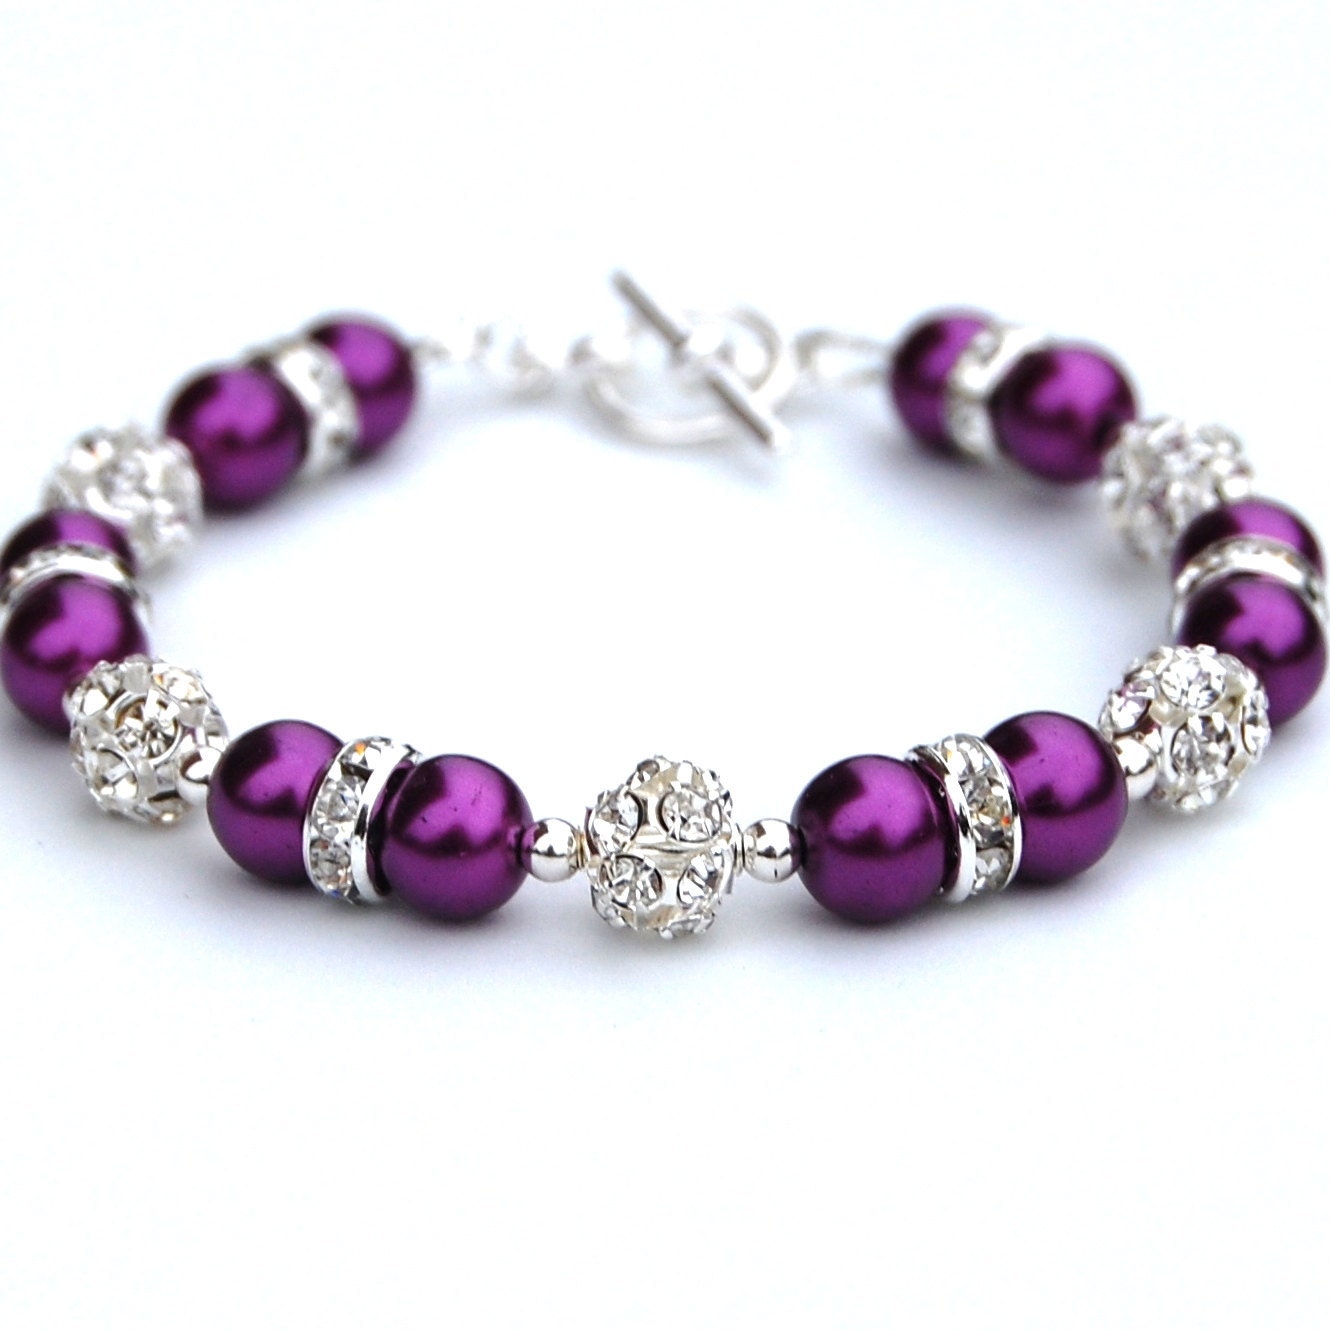 Pansy Purple Pearl Rhinestone Bracelet, Bridesmaid Gifts, Bridal Party, Spring Wedding